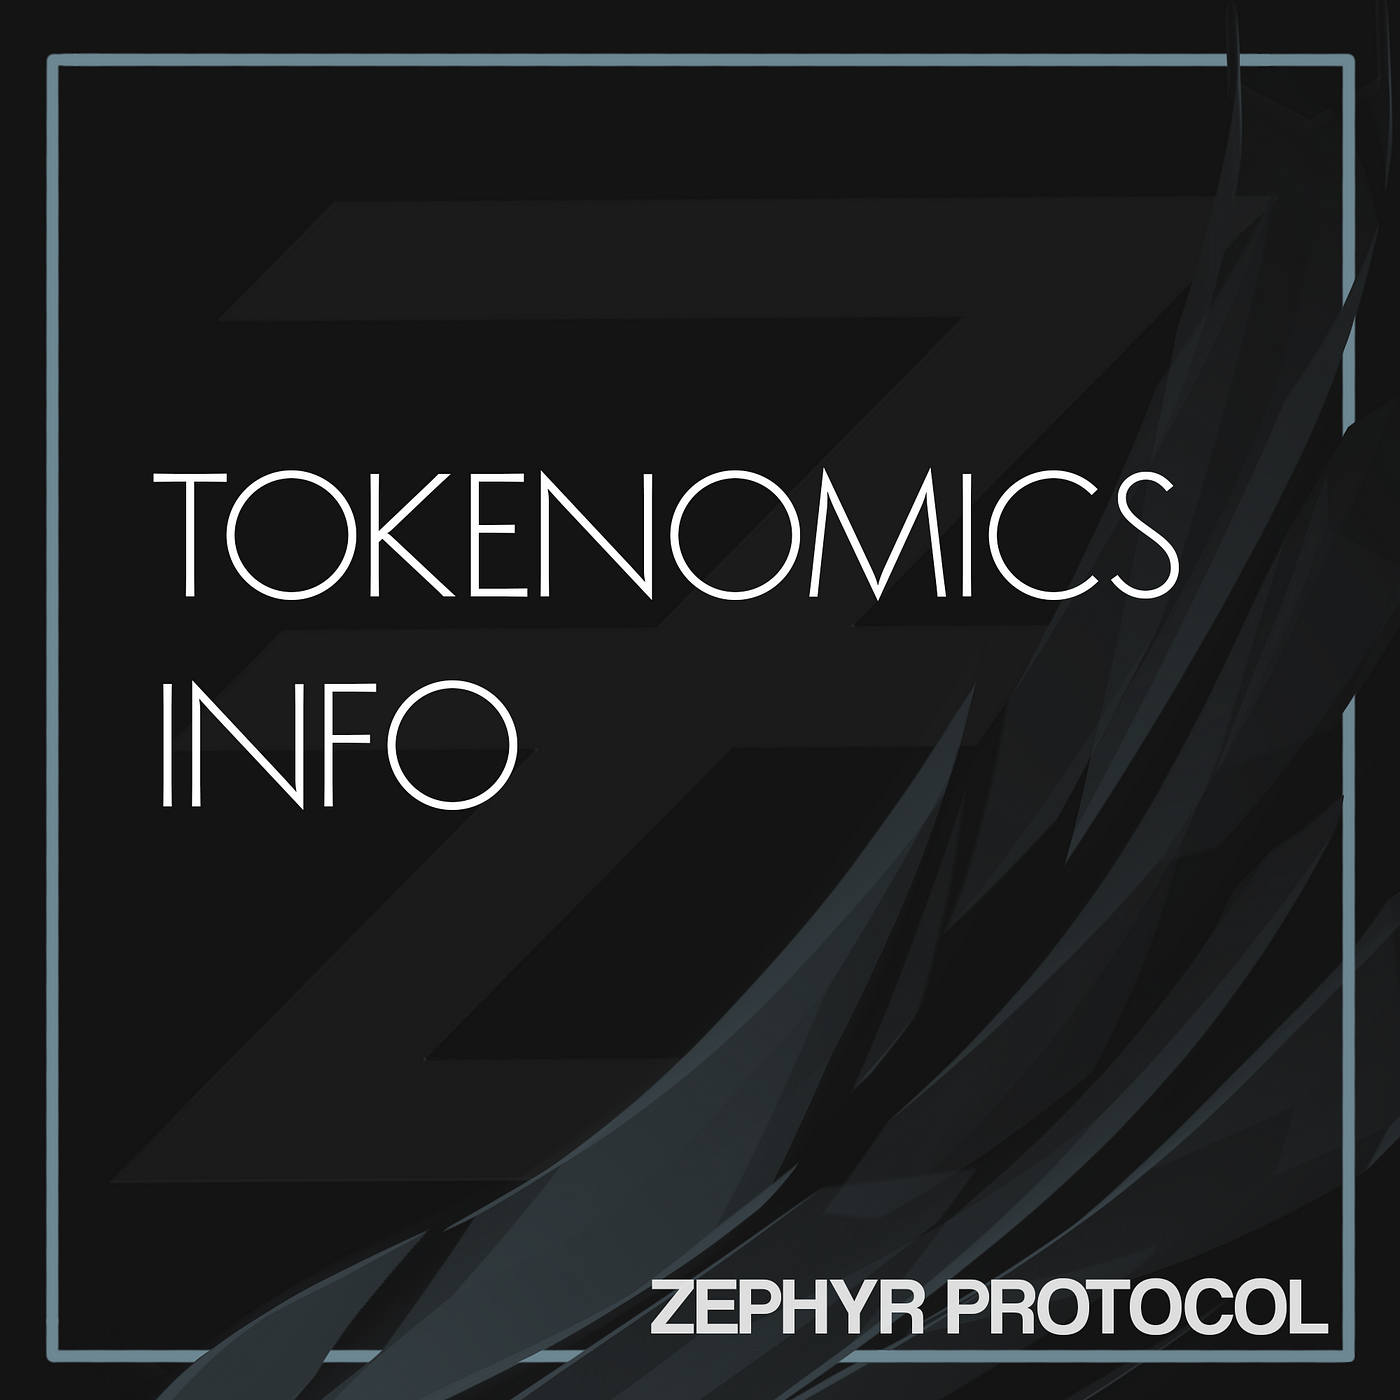 Zephyr Protocol — Tokenomics Information, by Zephyr Protocol